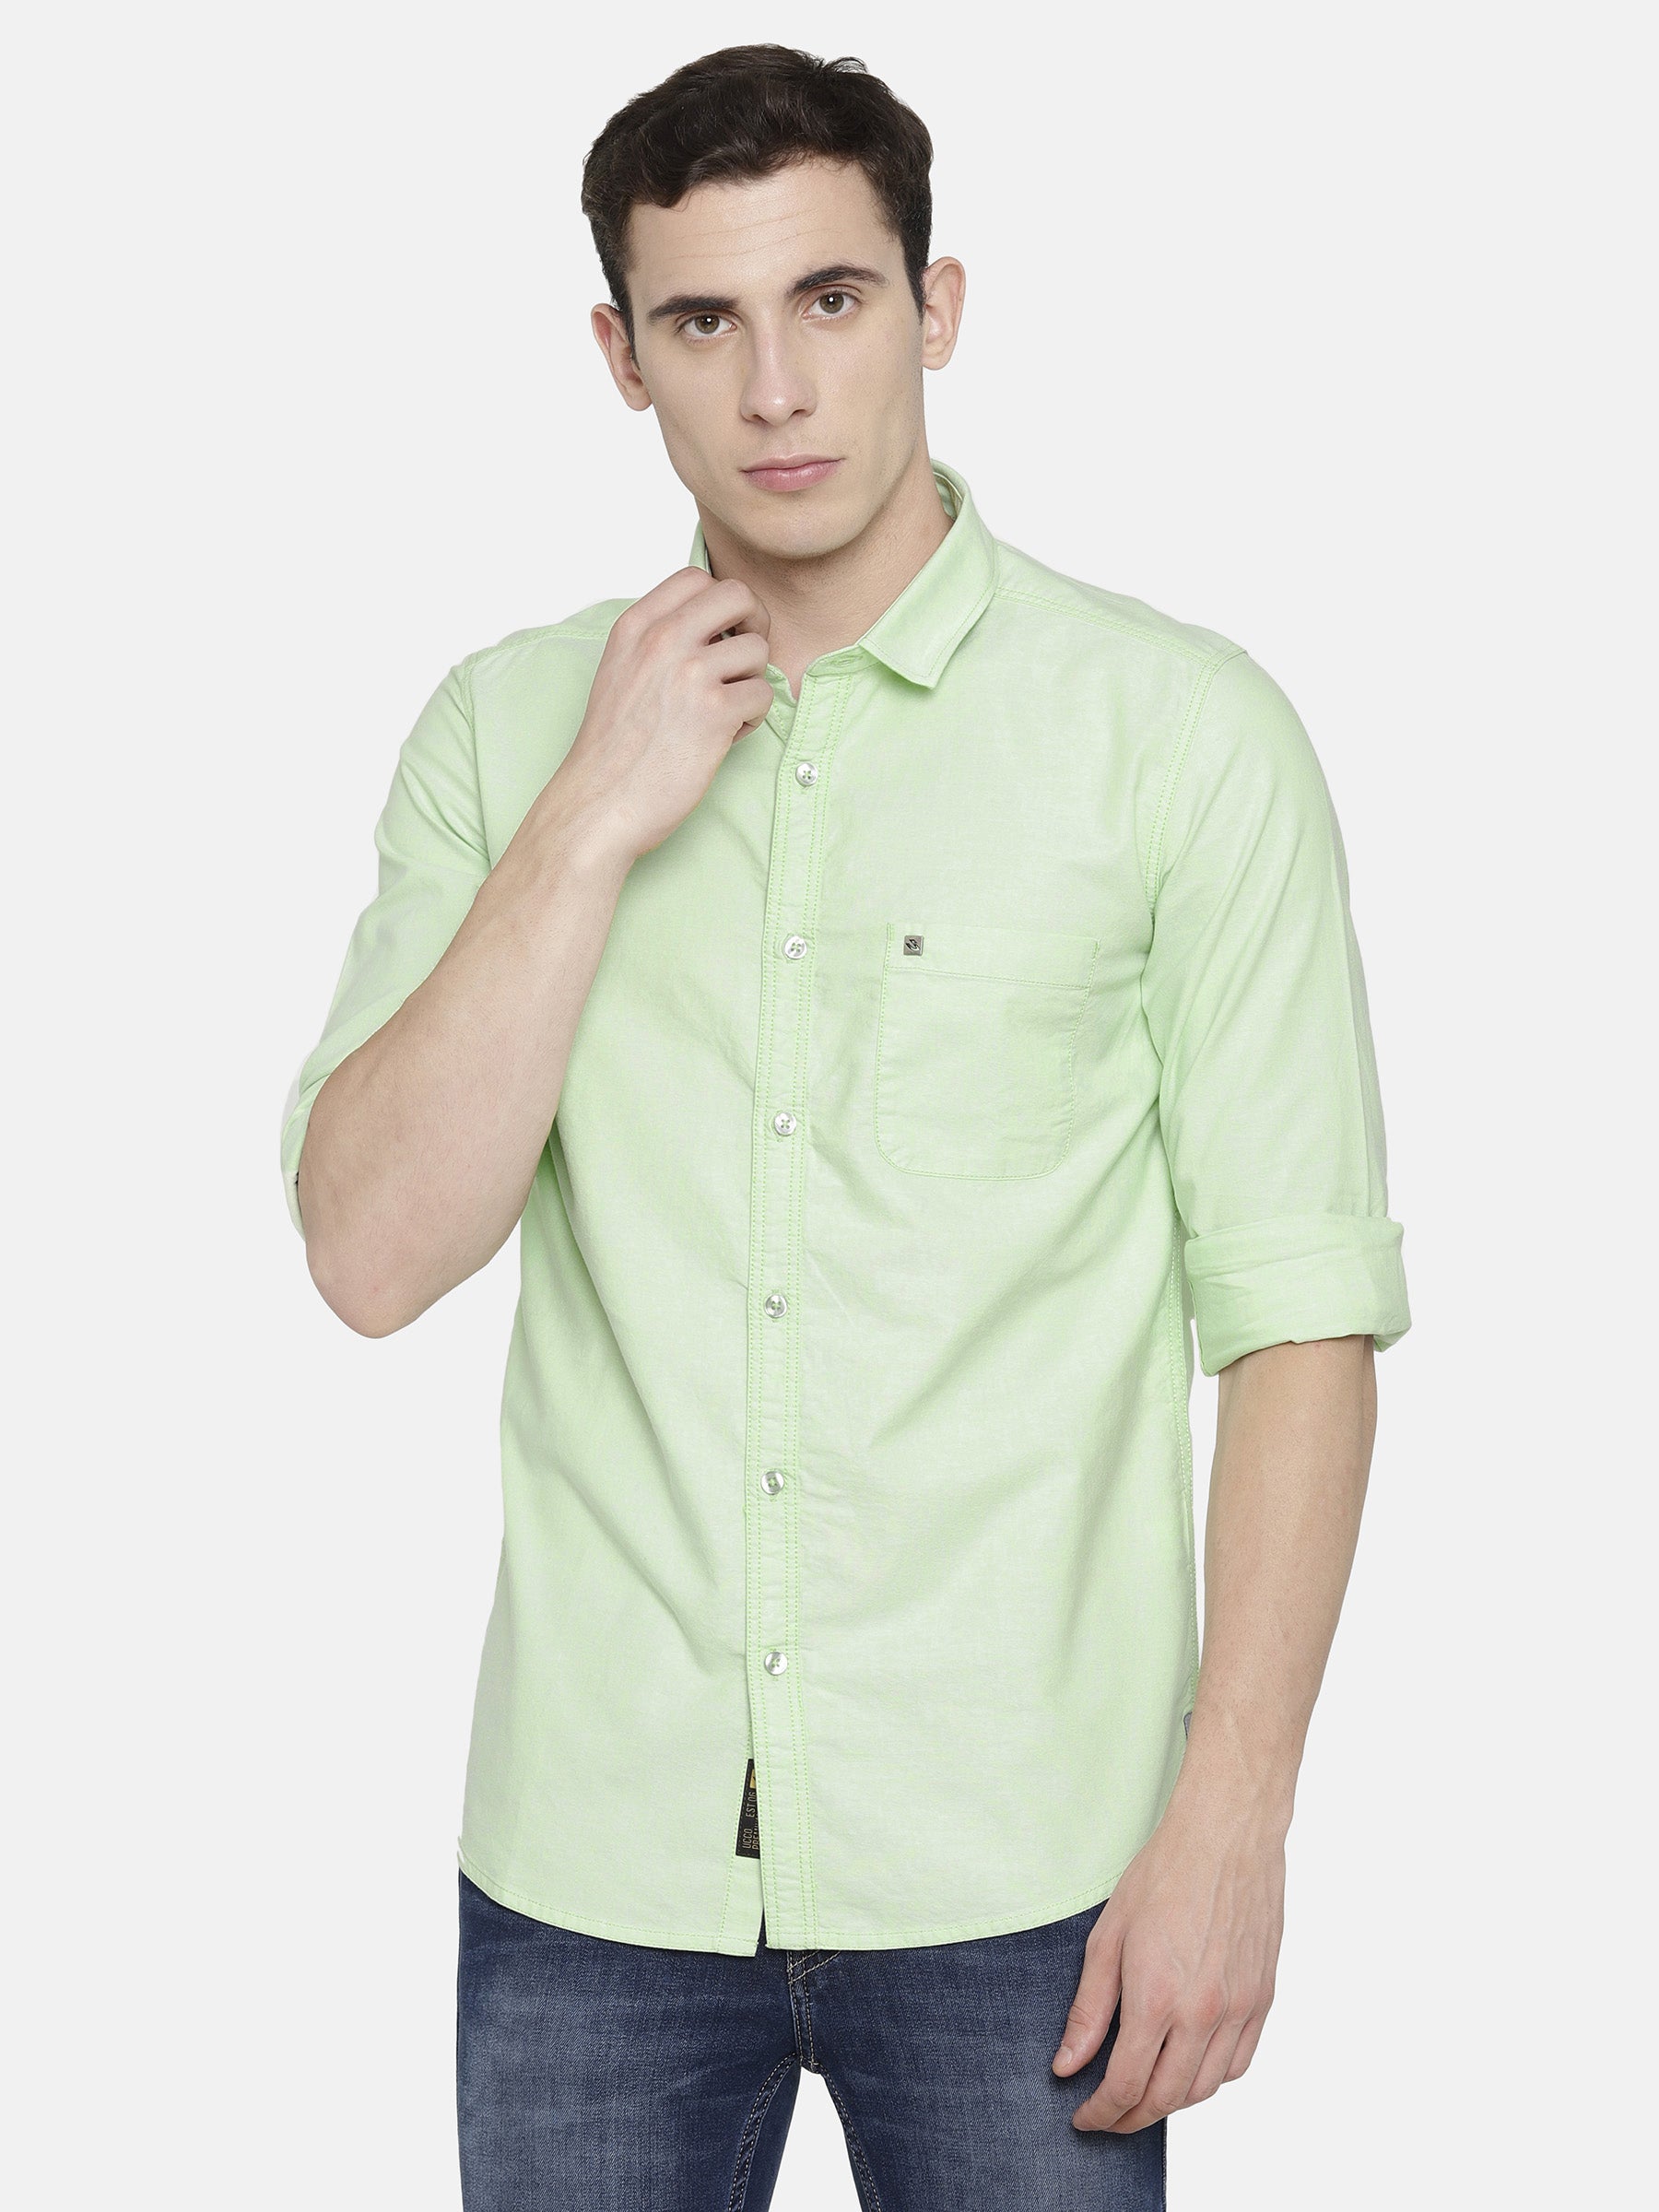 Formal Shirts  Causal Shirts for Men  Stylish shirts men Formal shirts  for men Mens smart casual outfits